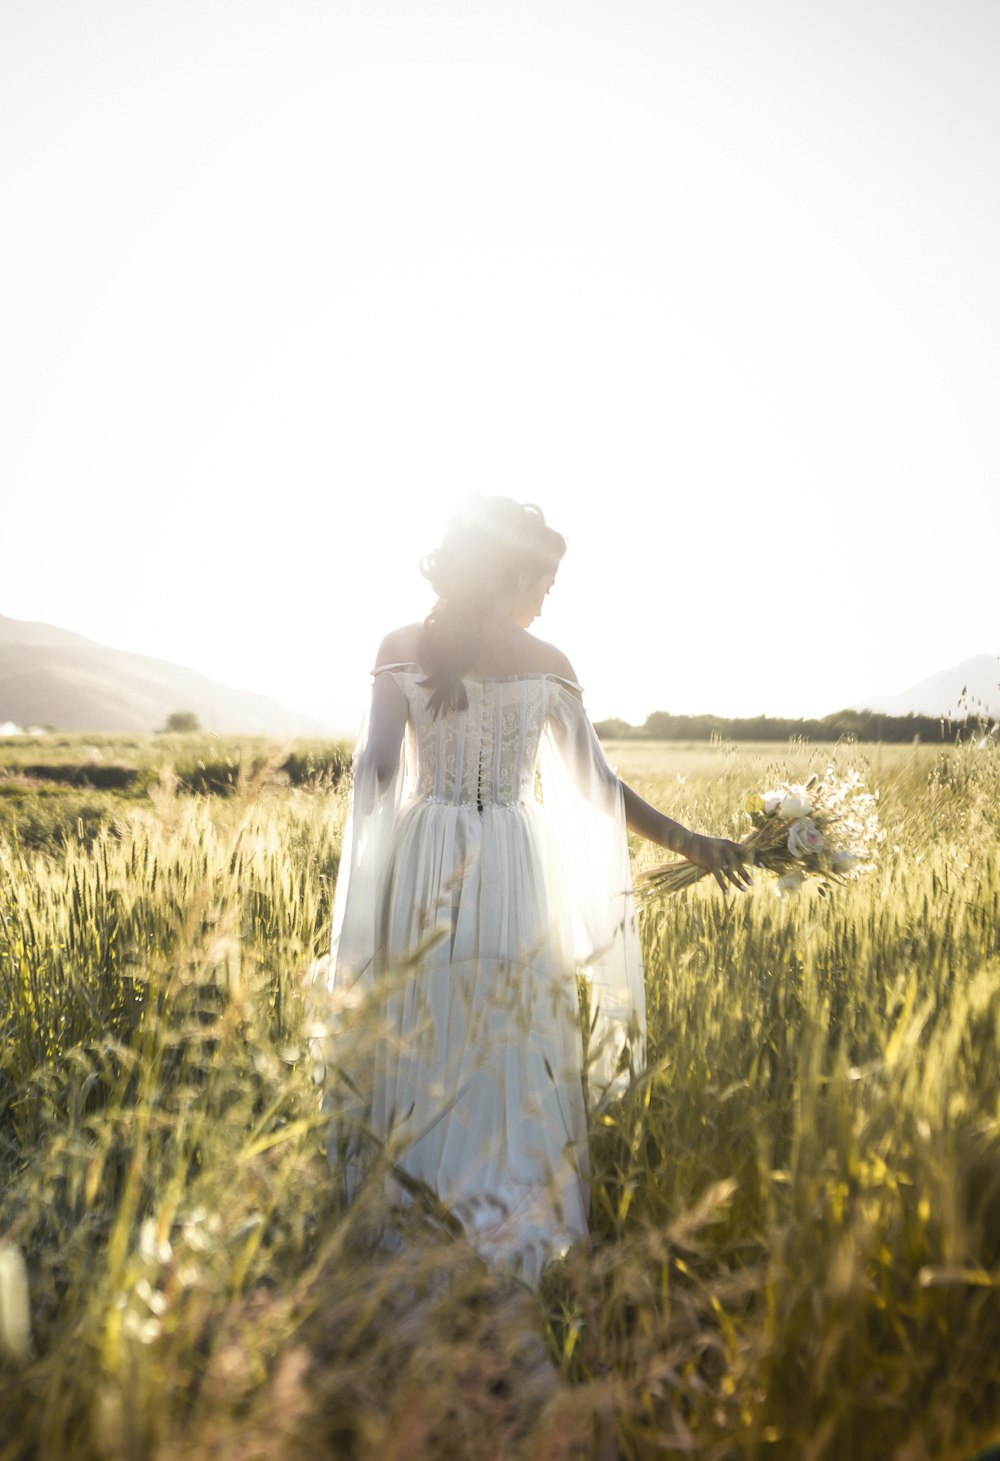 woman wearing white dress on grass field